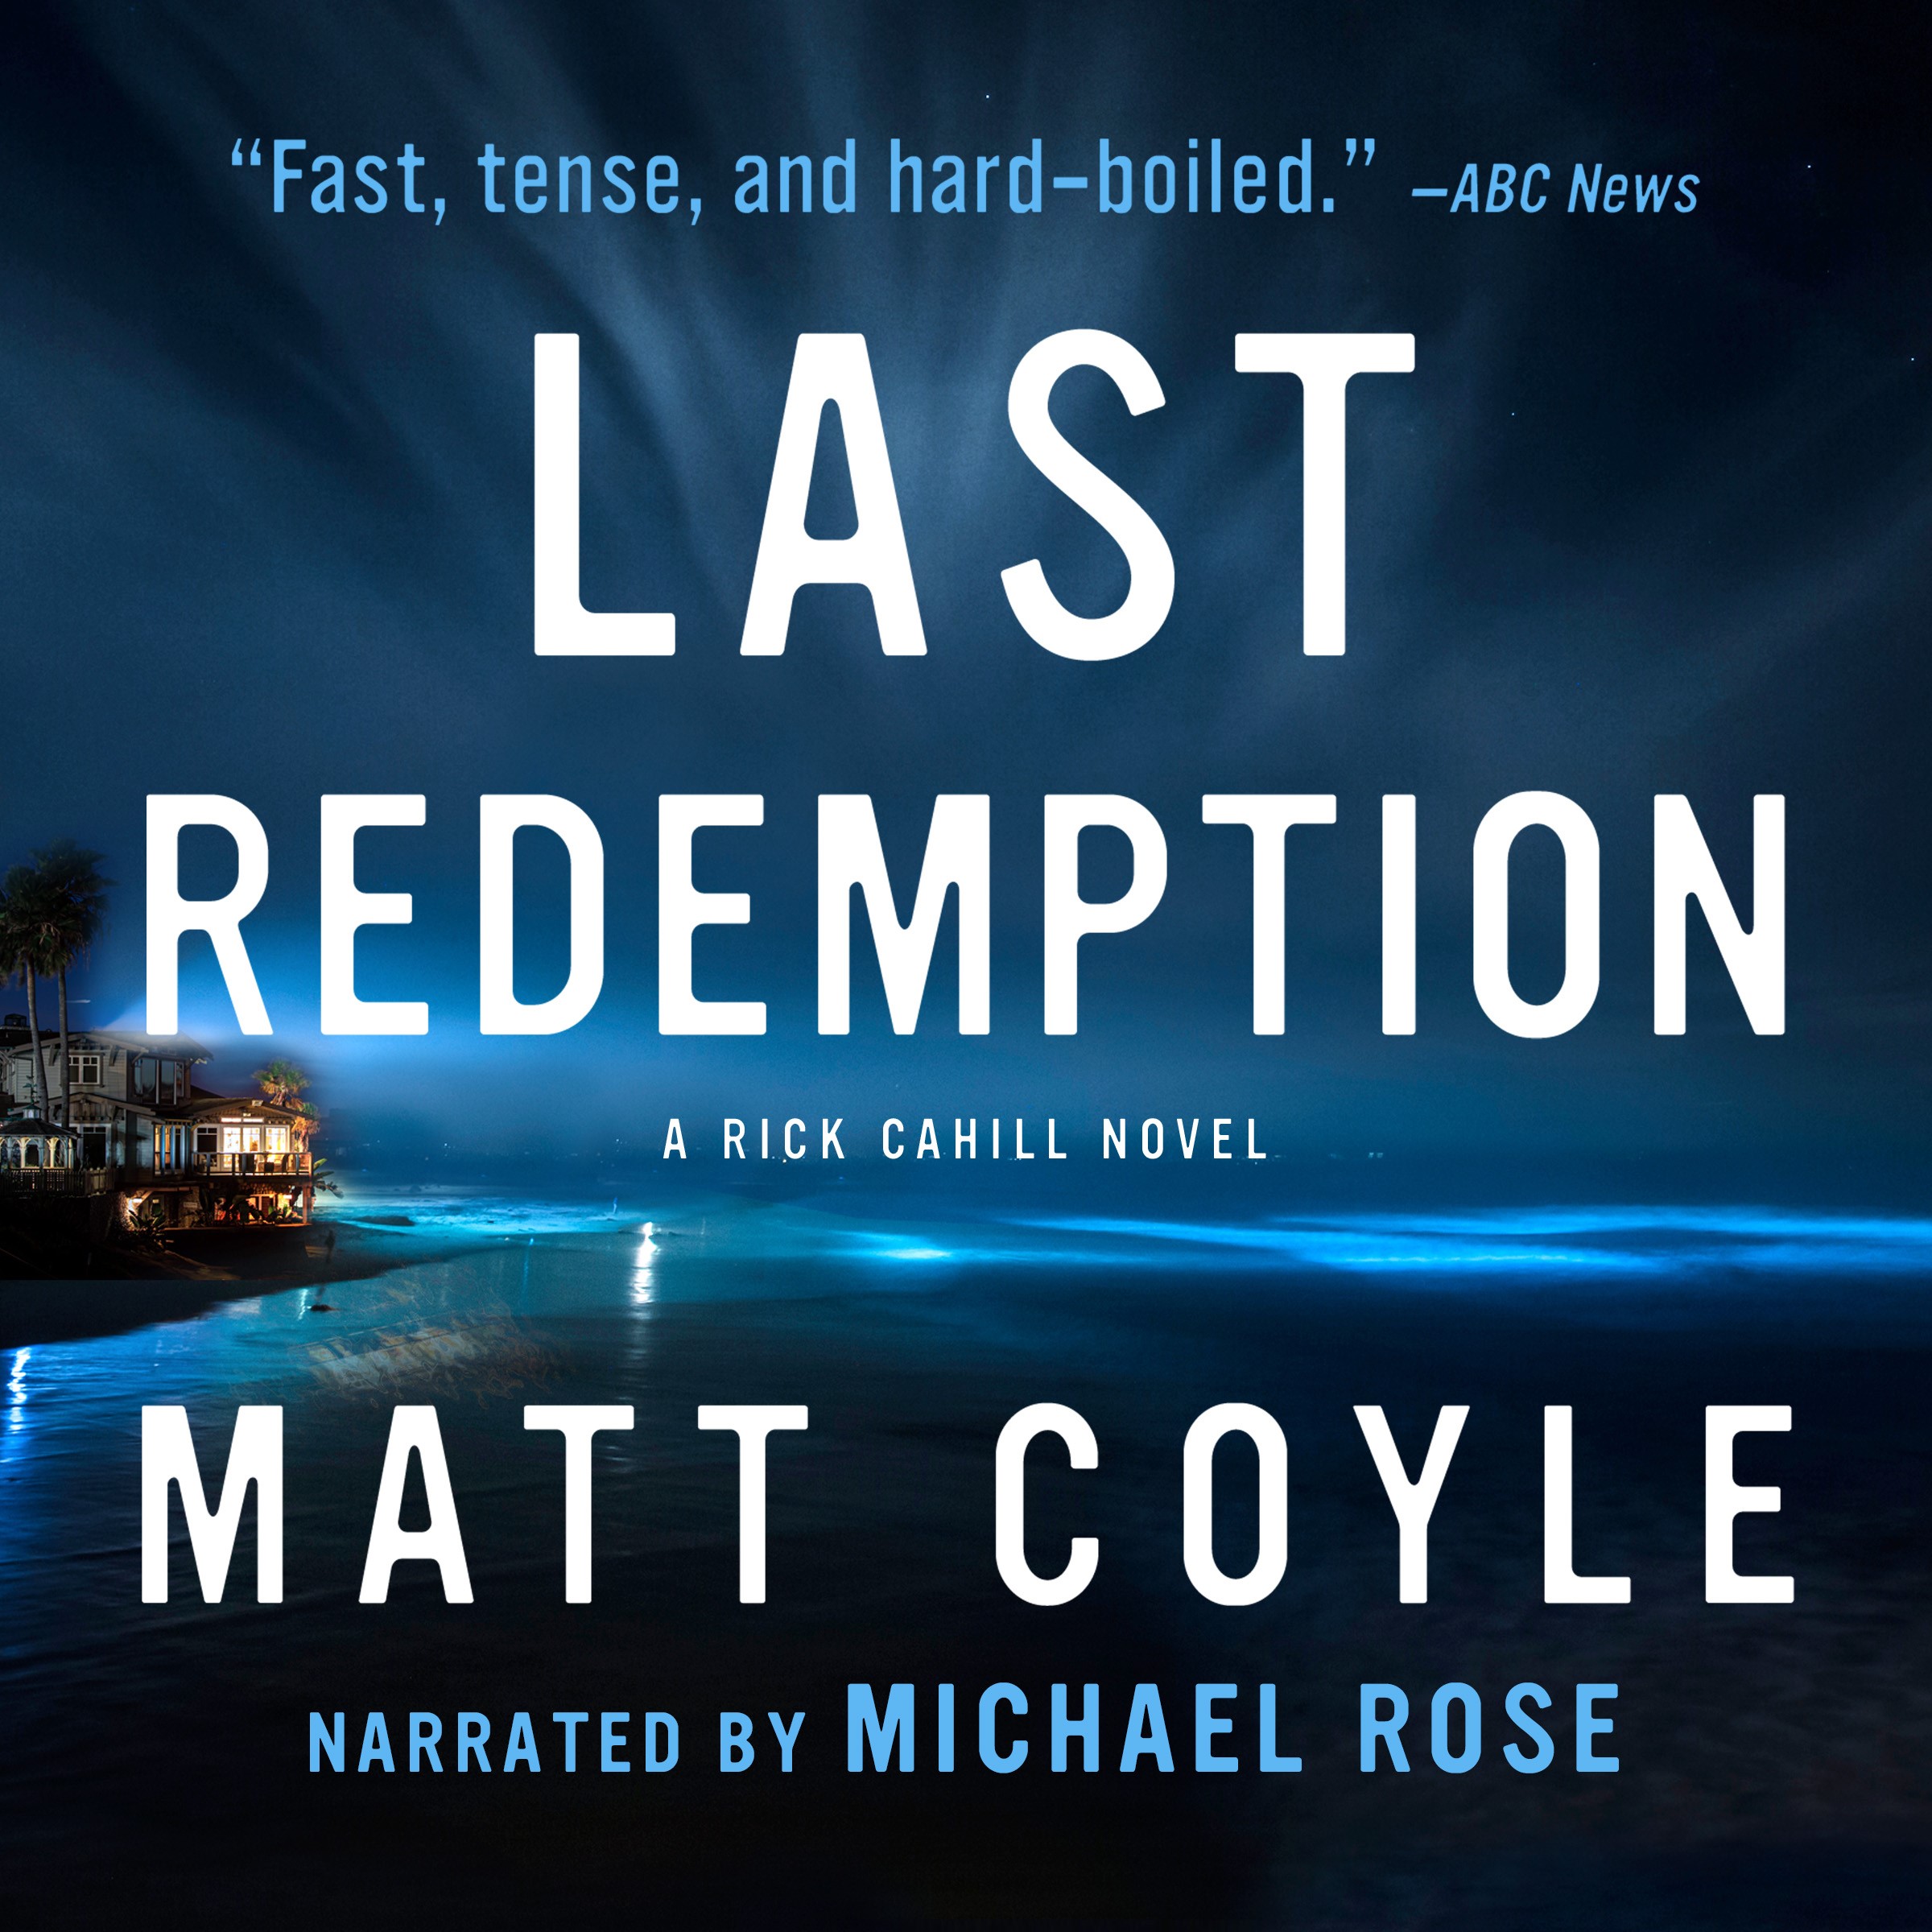 Last Redemption by Matt Coyle